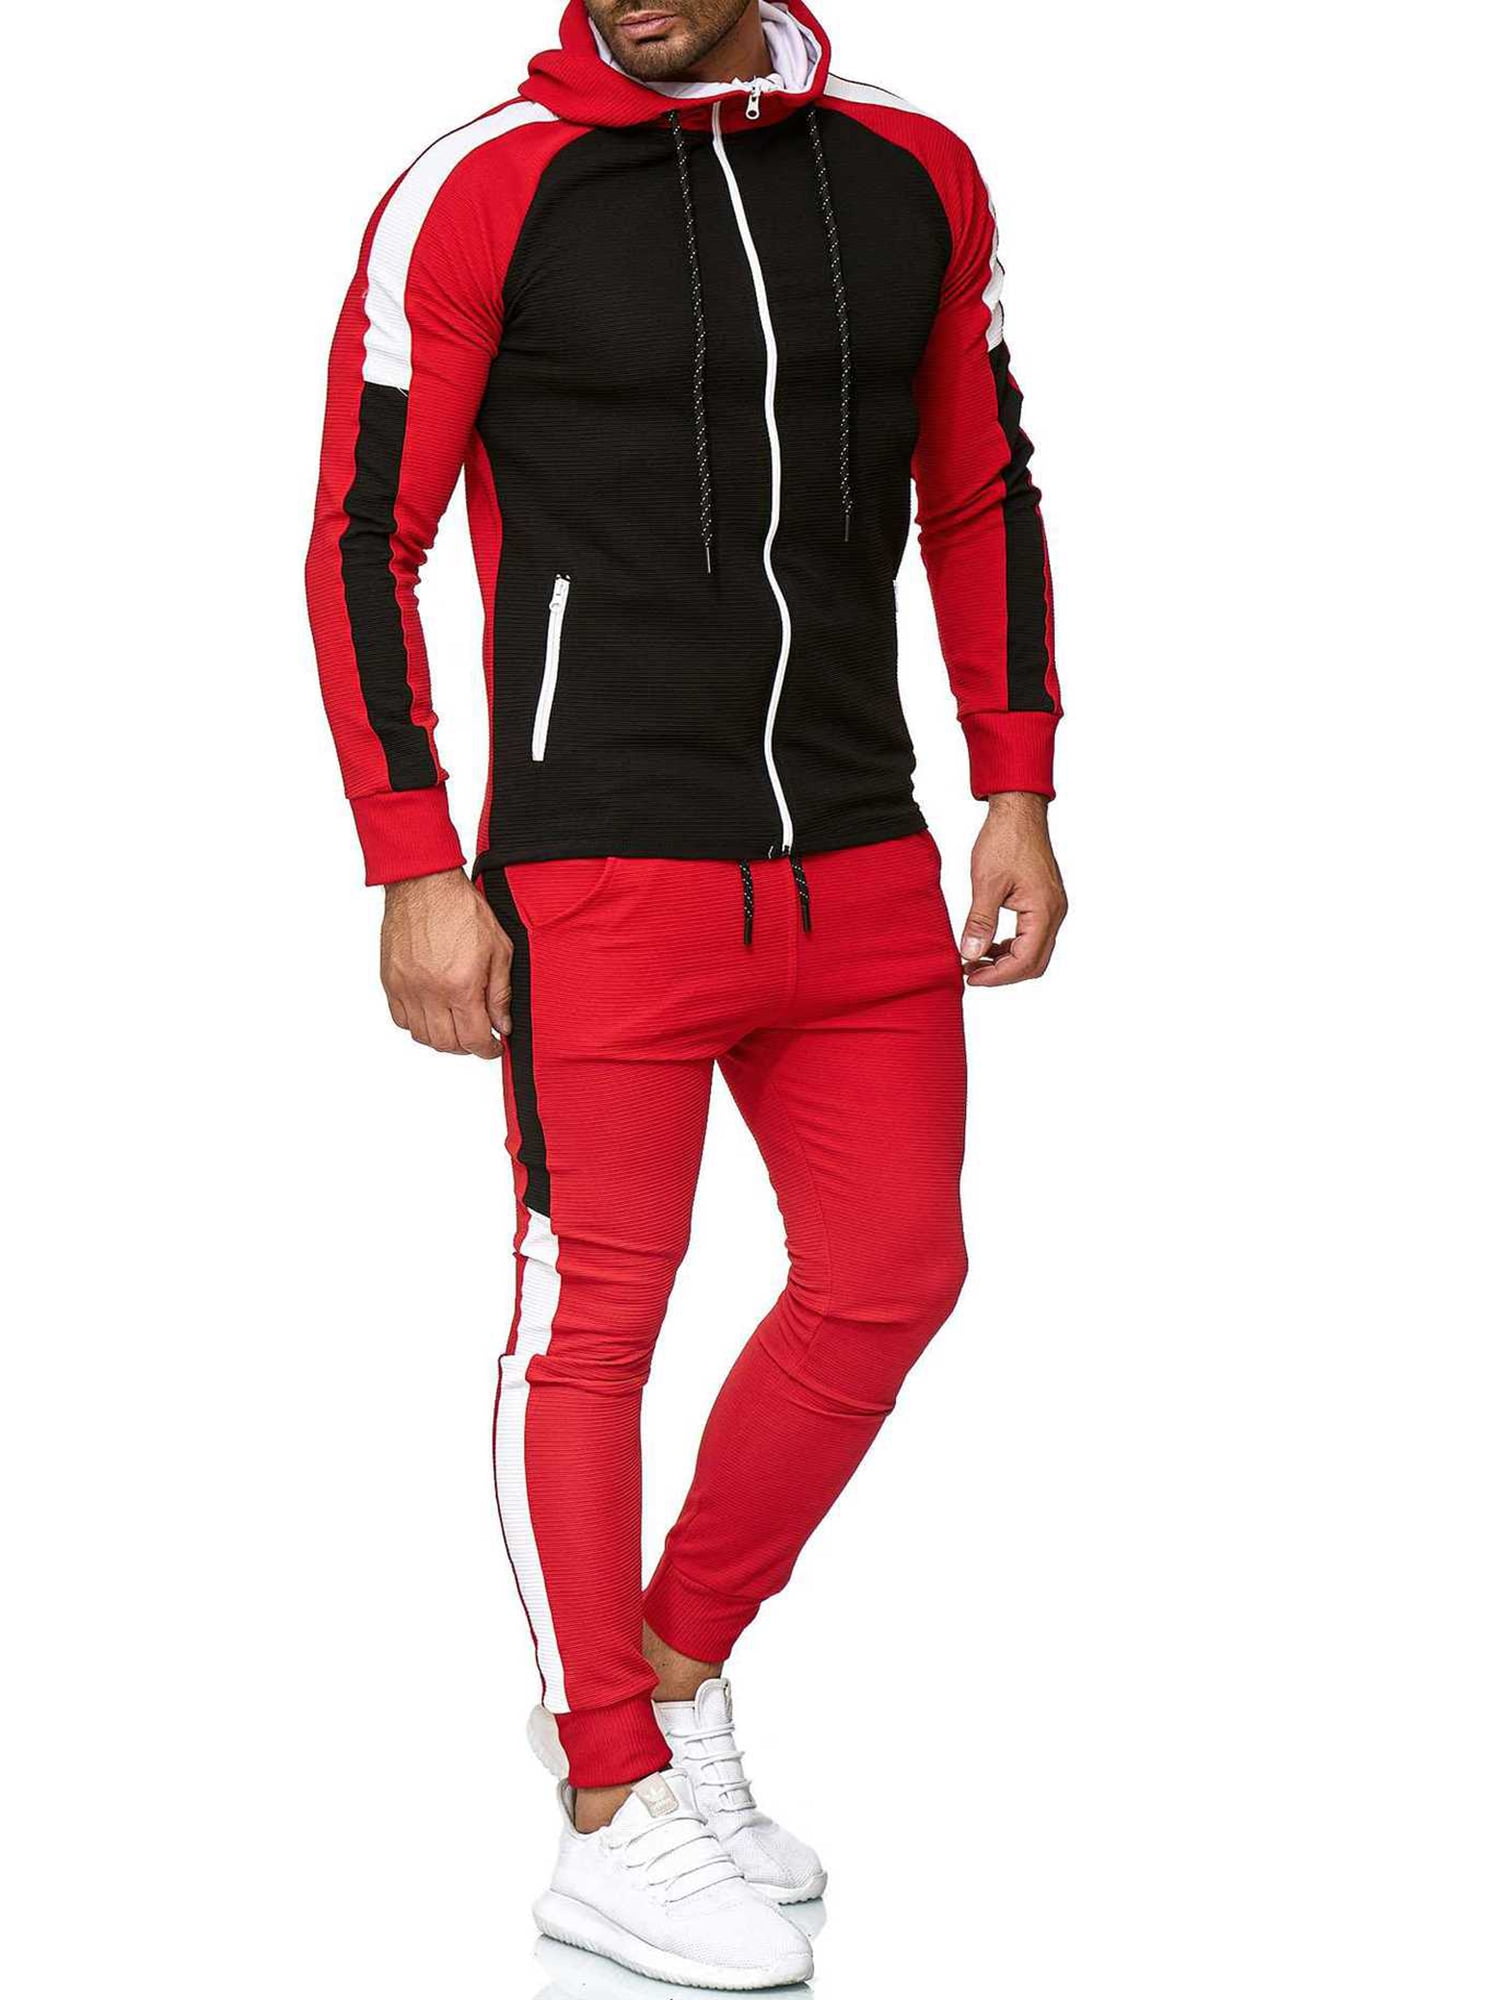 Mens Tracksuit Fitness Jogging Suit Basic Casual Streetwear Sport Outfit Gym Set Jacket & Pants